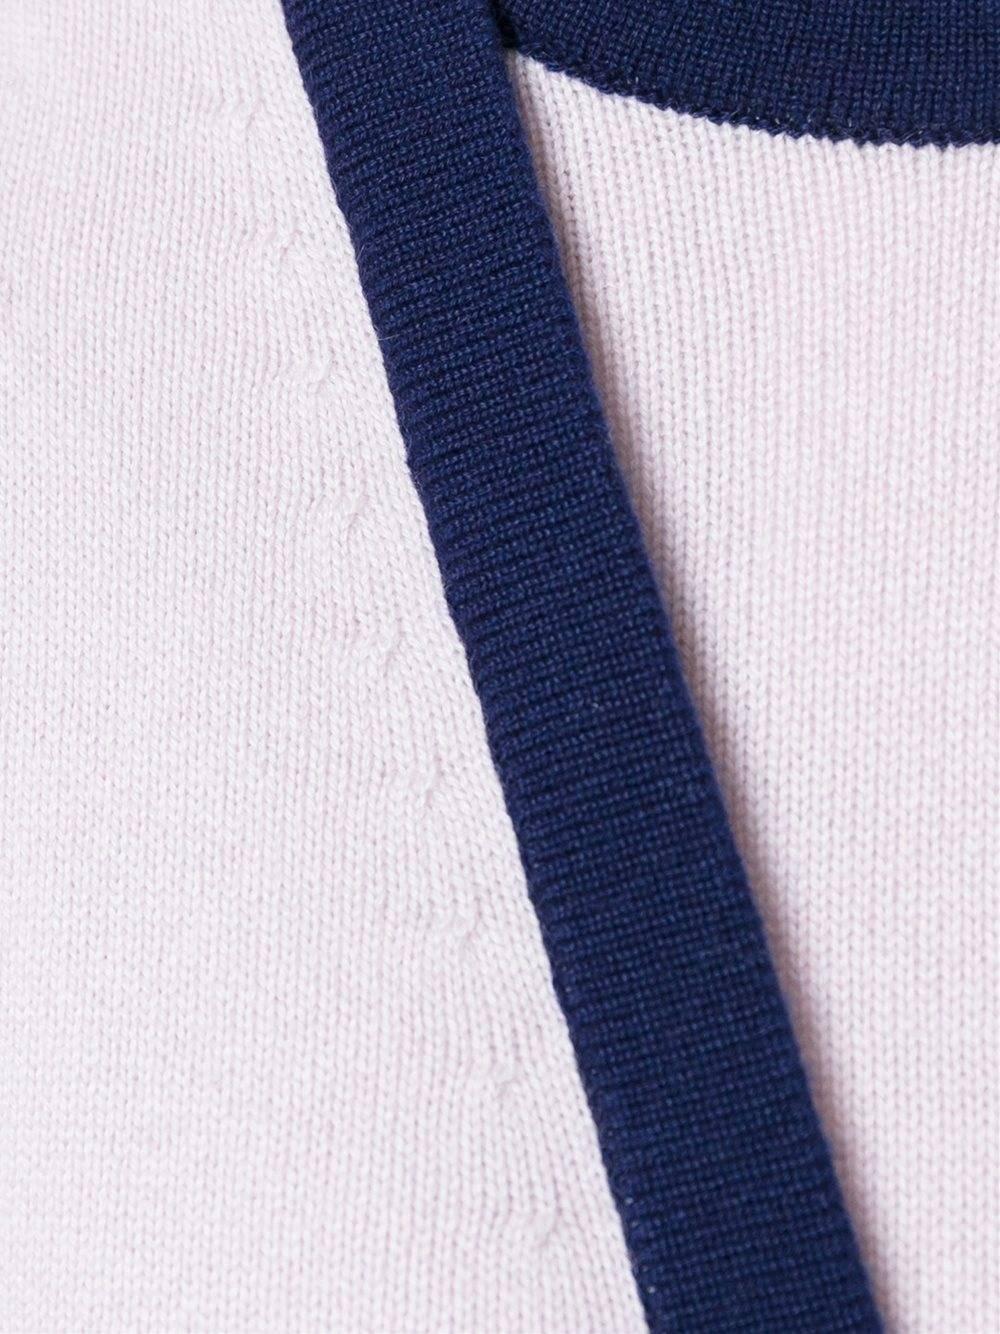 Pink cashmere sleeveless cardigan dress. 

Colour: Pink / Blue

Materials: Cashmere 100%

Size: FR 40

Measurements: bust: 94 centimetres, shoulder: 35 centimetres

Condition: 9.5 out of 10